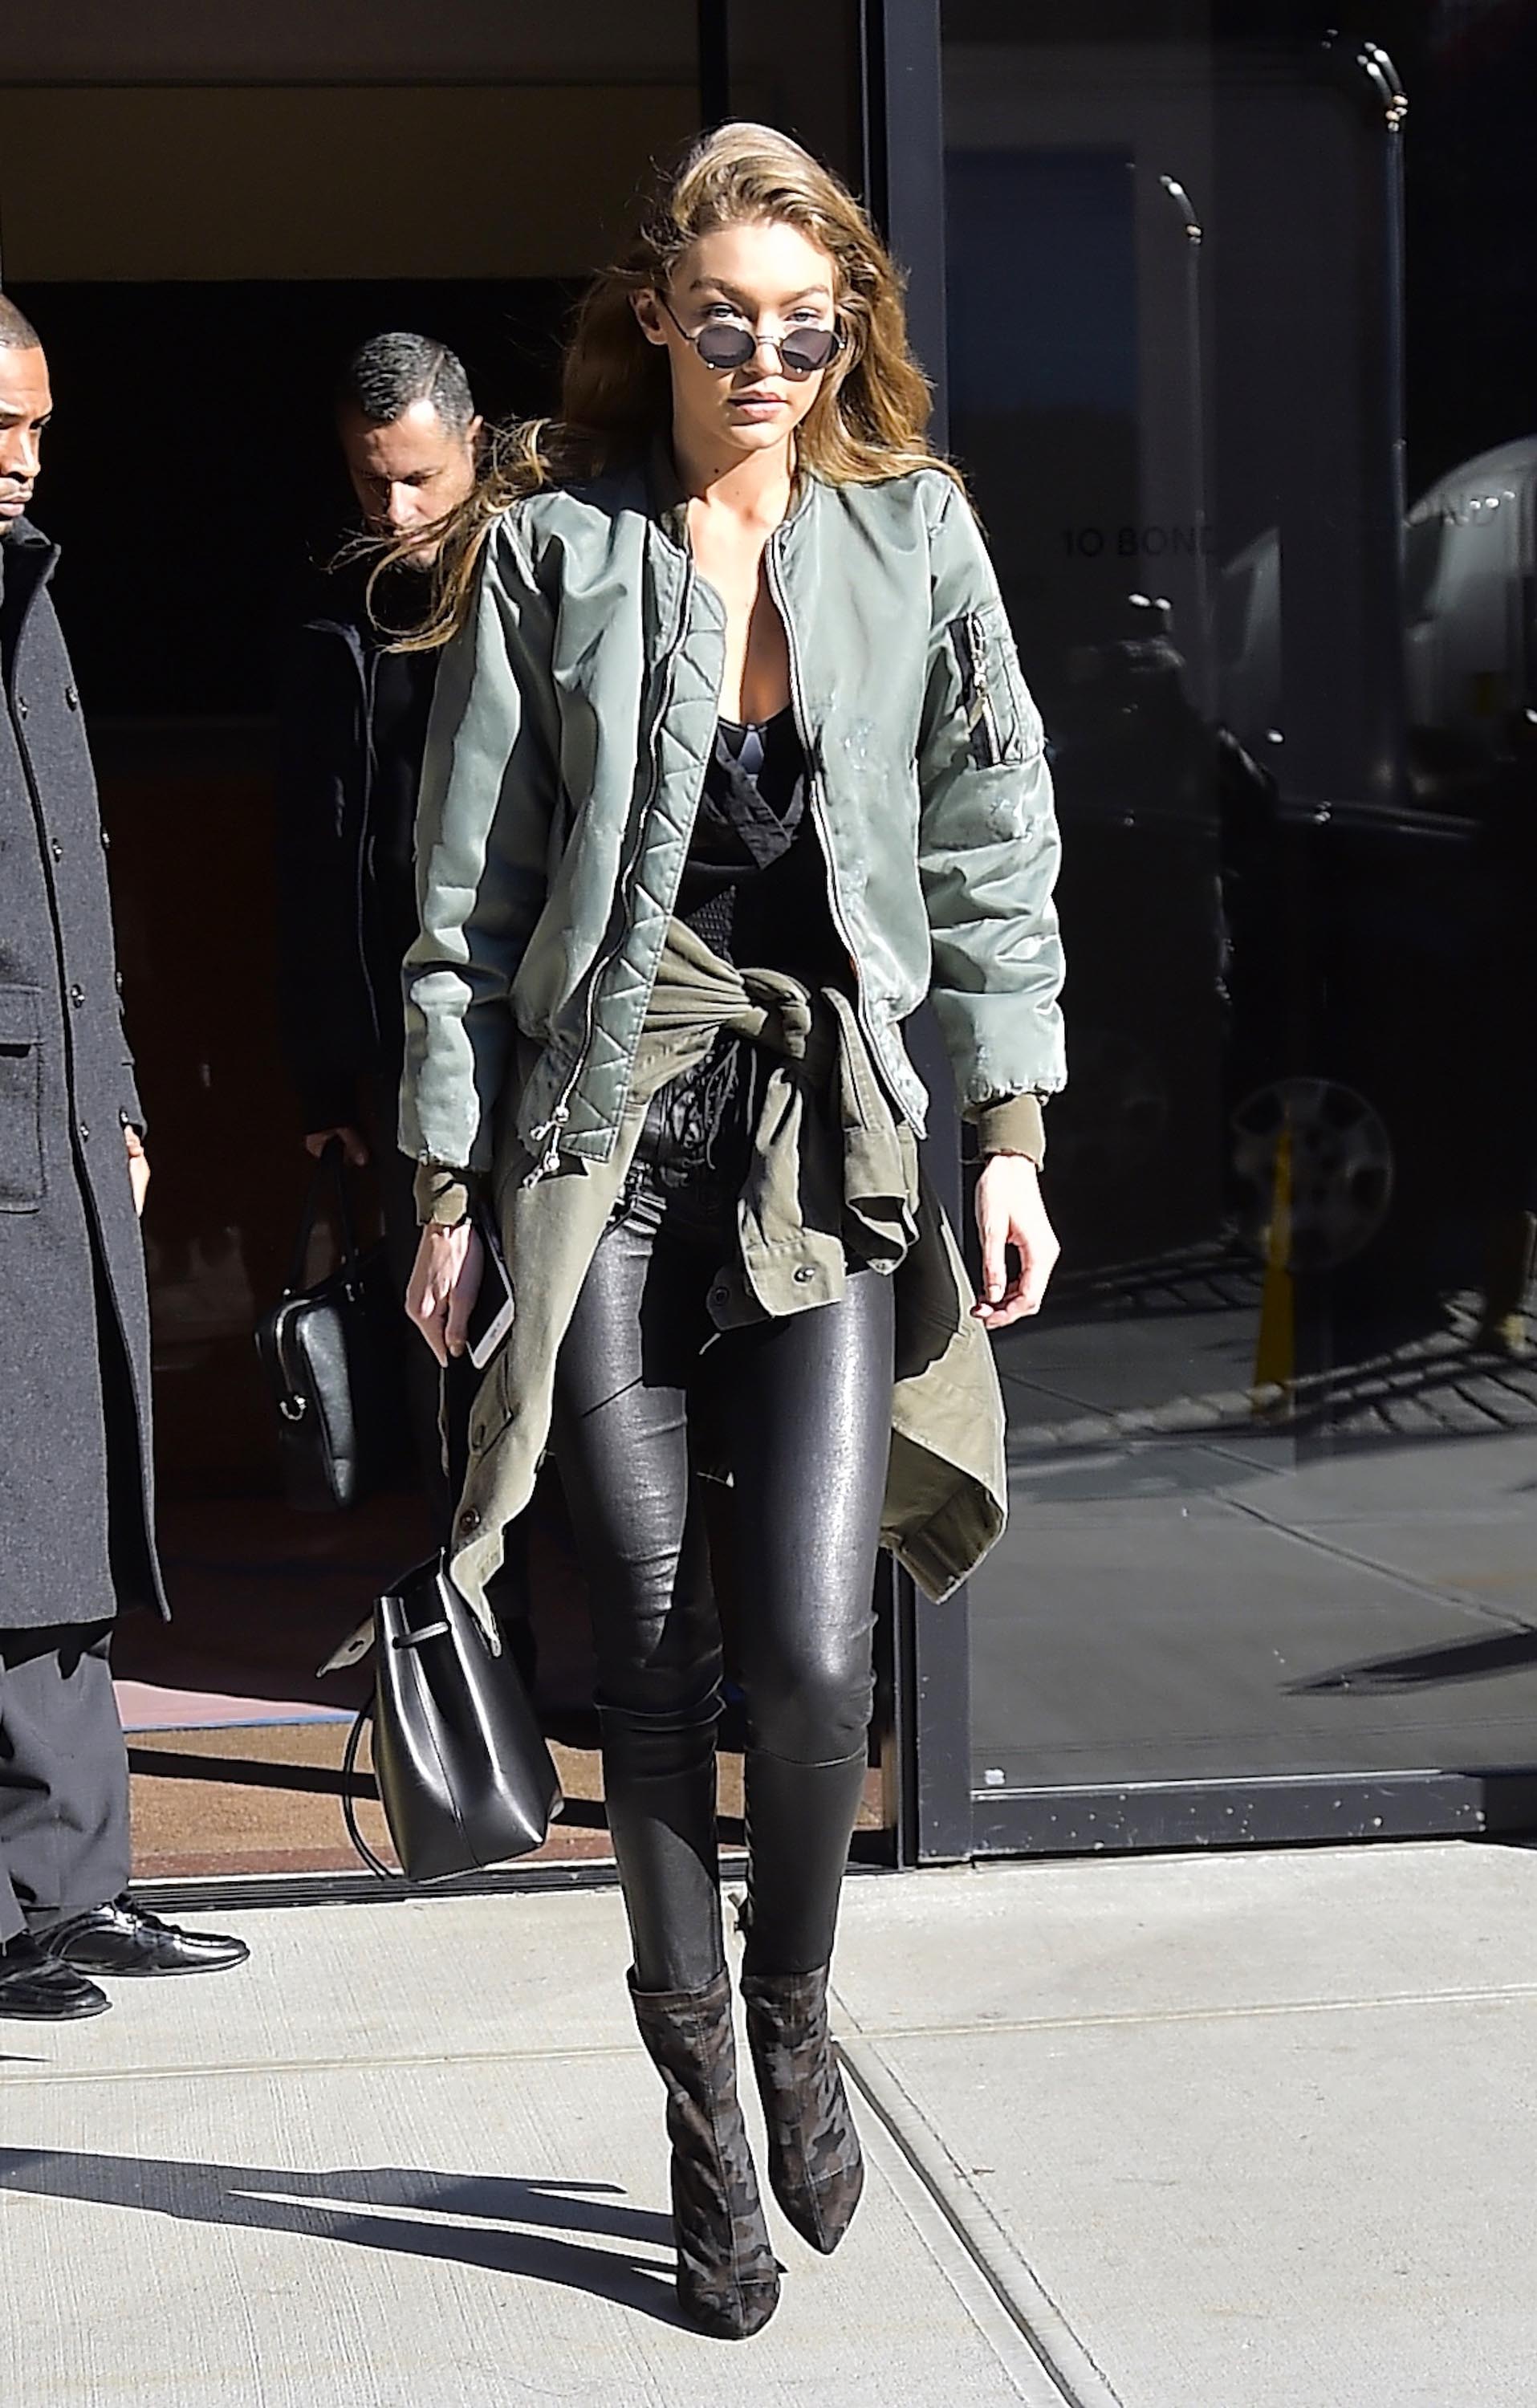 Gigi Hadid is seen in New York City